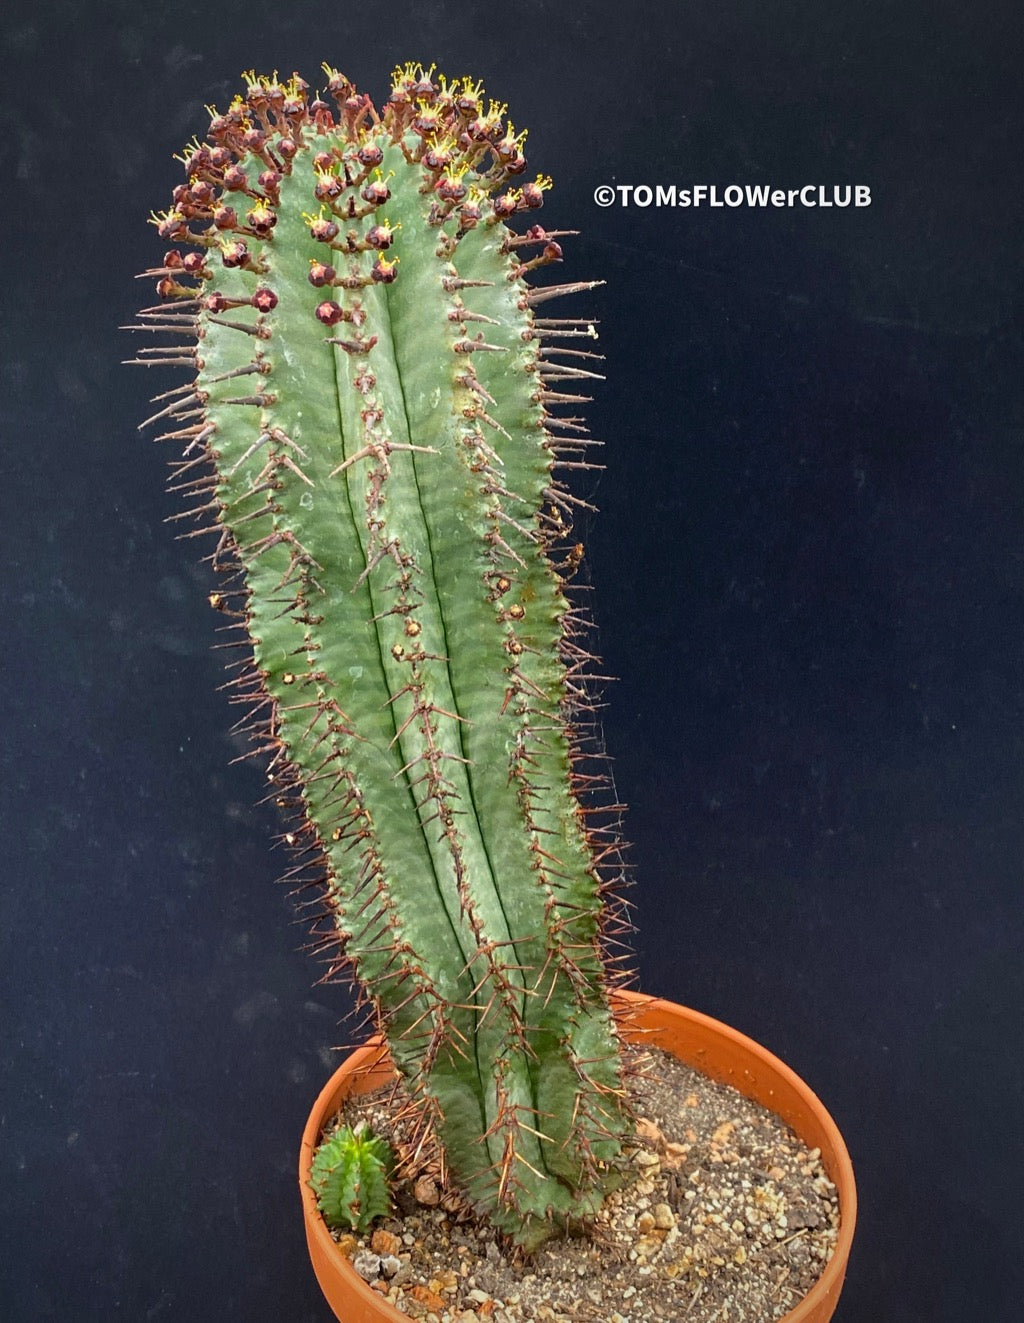 Cactus déco jardin - Organic Store